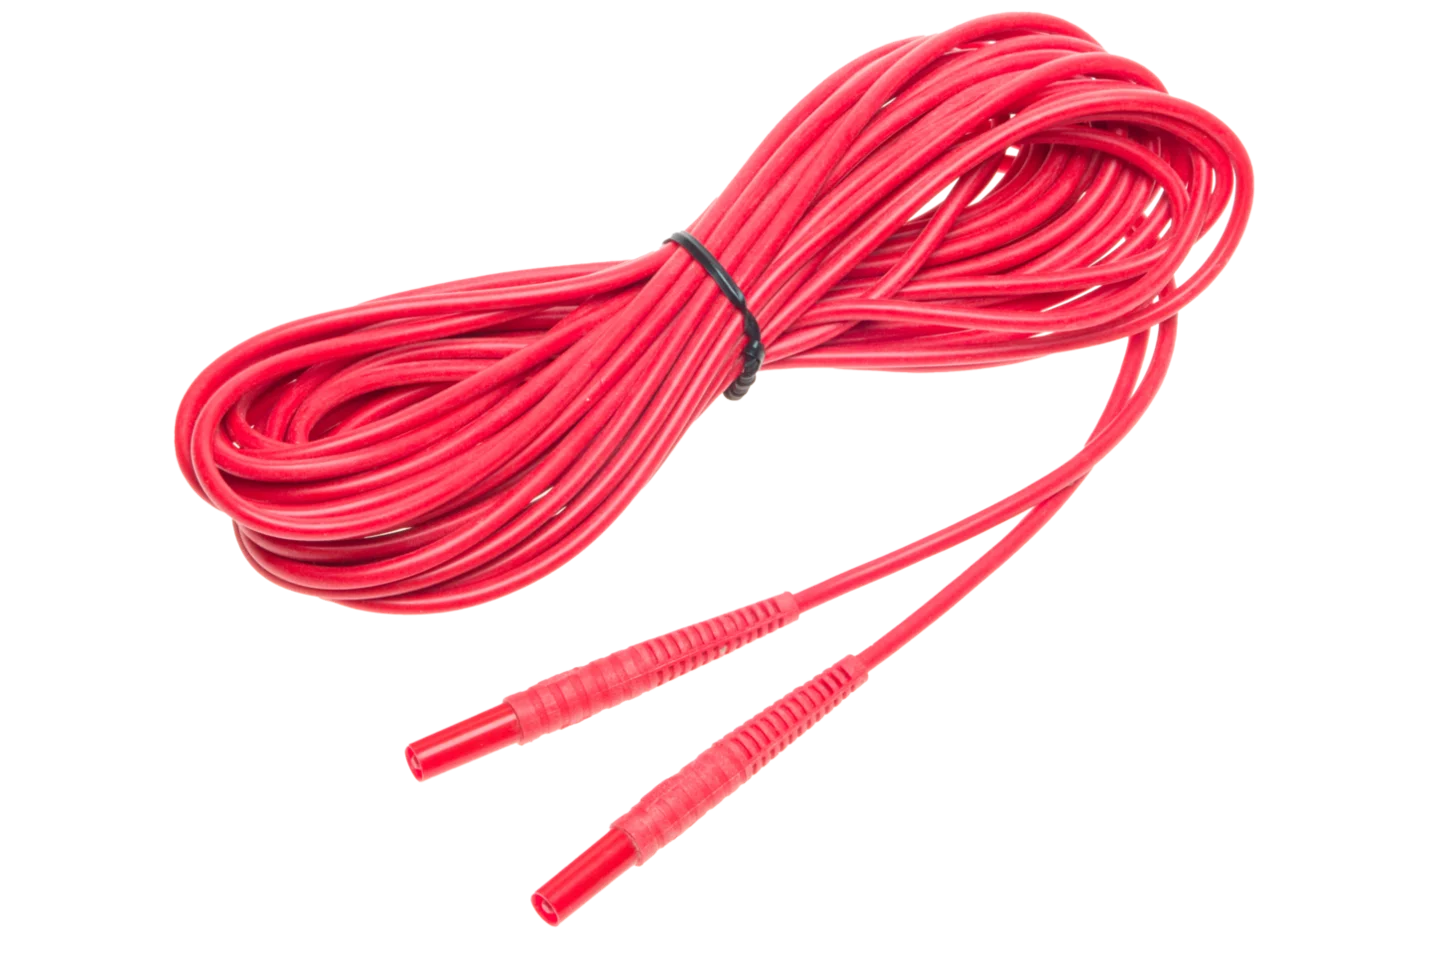 Test lead 10 m 1 kV (banana plugs) red